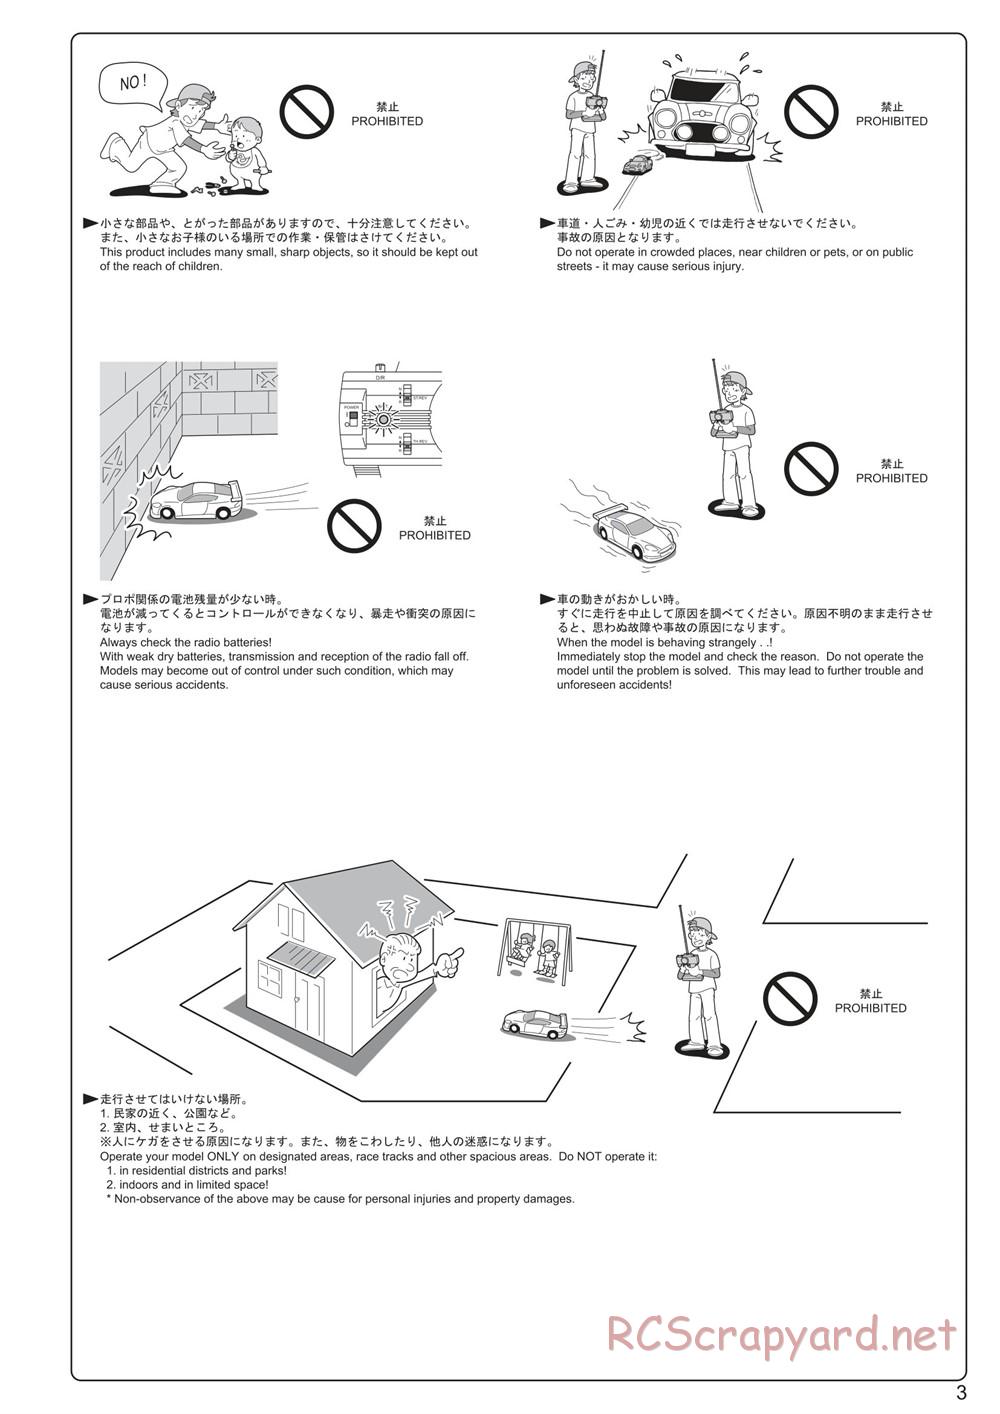 Kyosho - Lazer ZX7 - Manual - Page 3